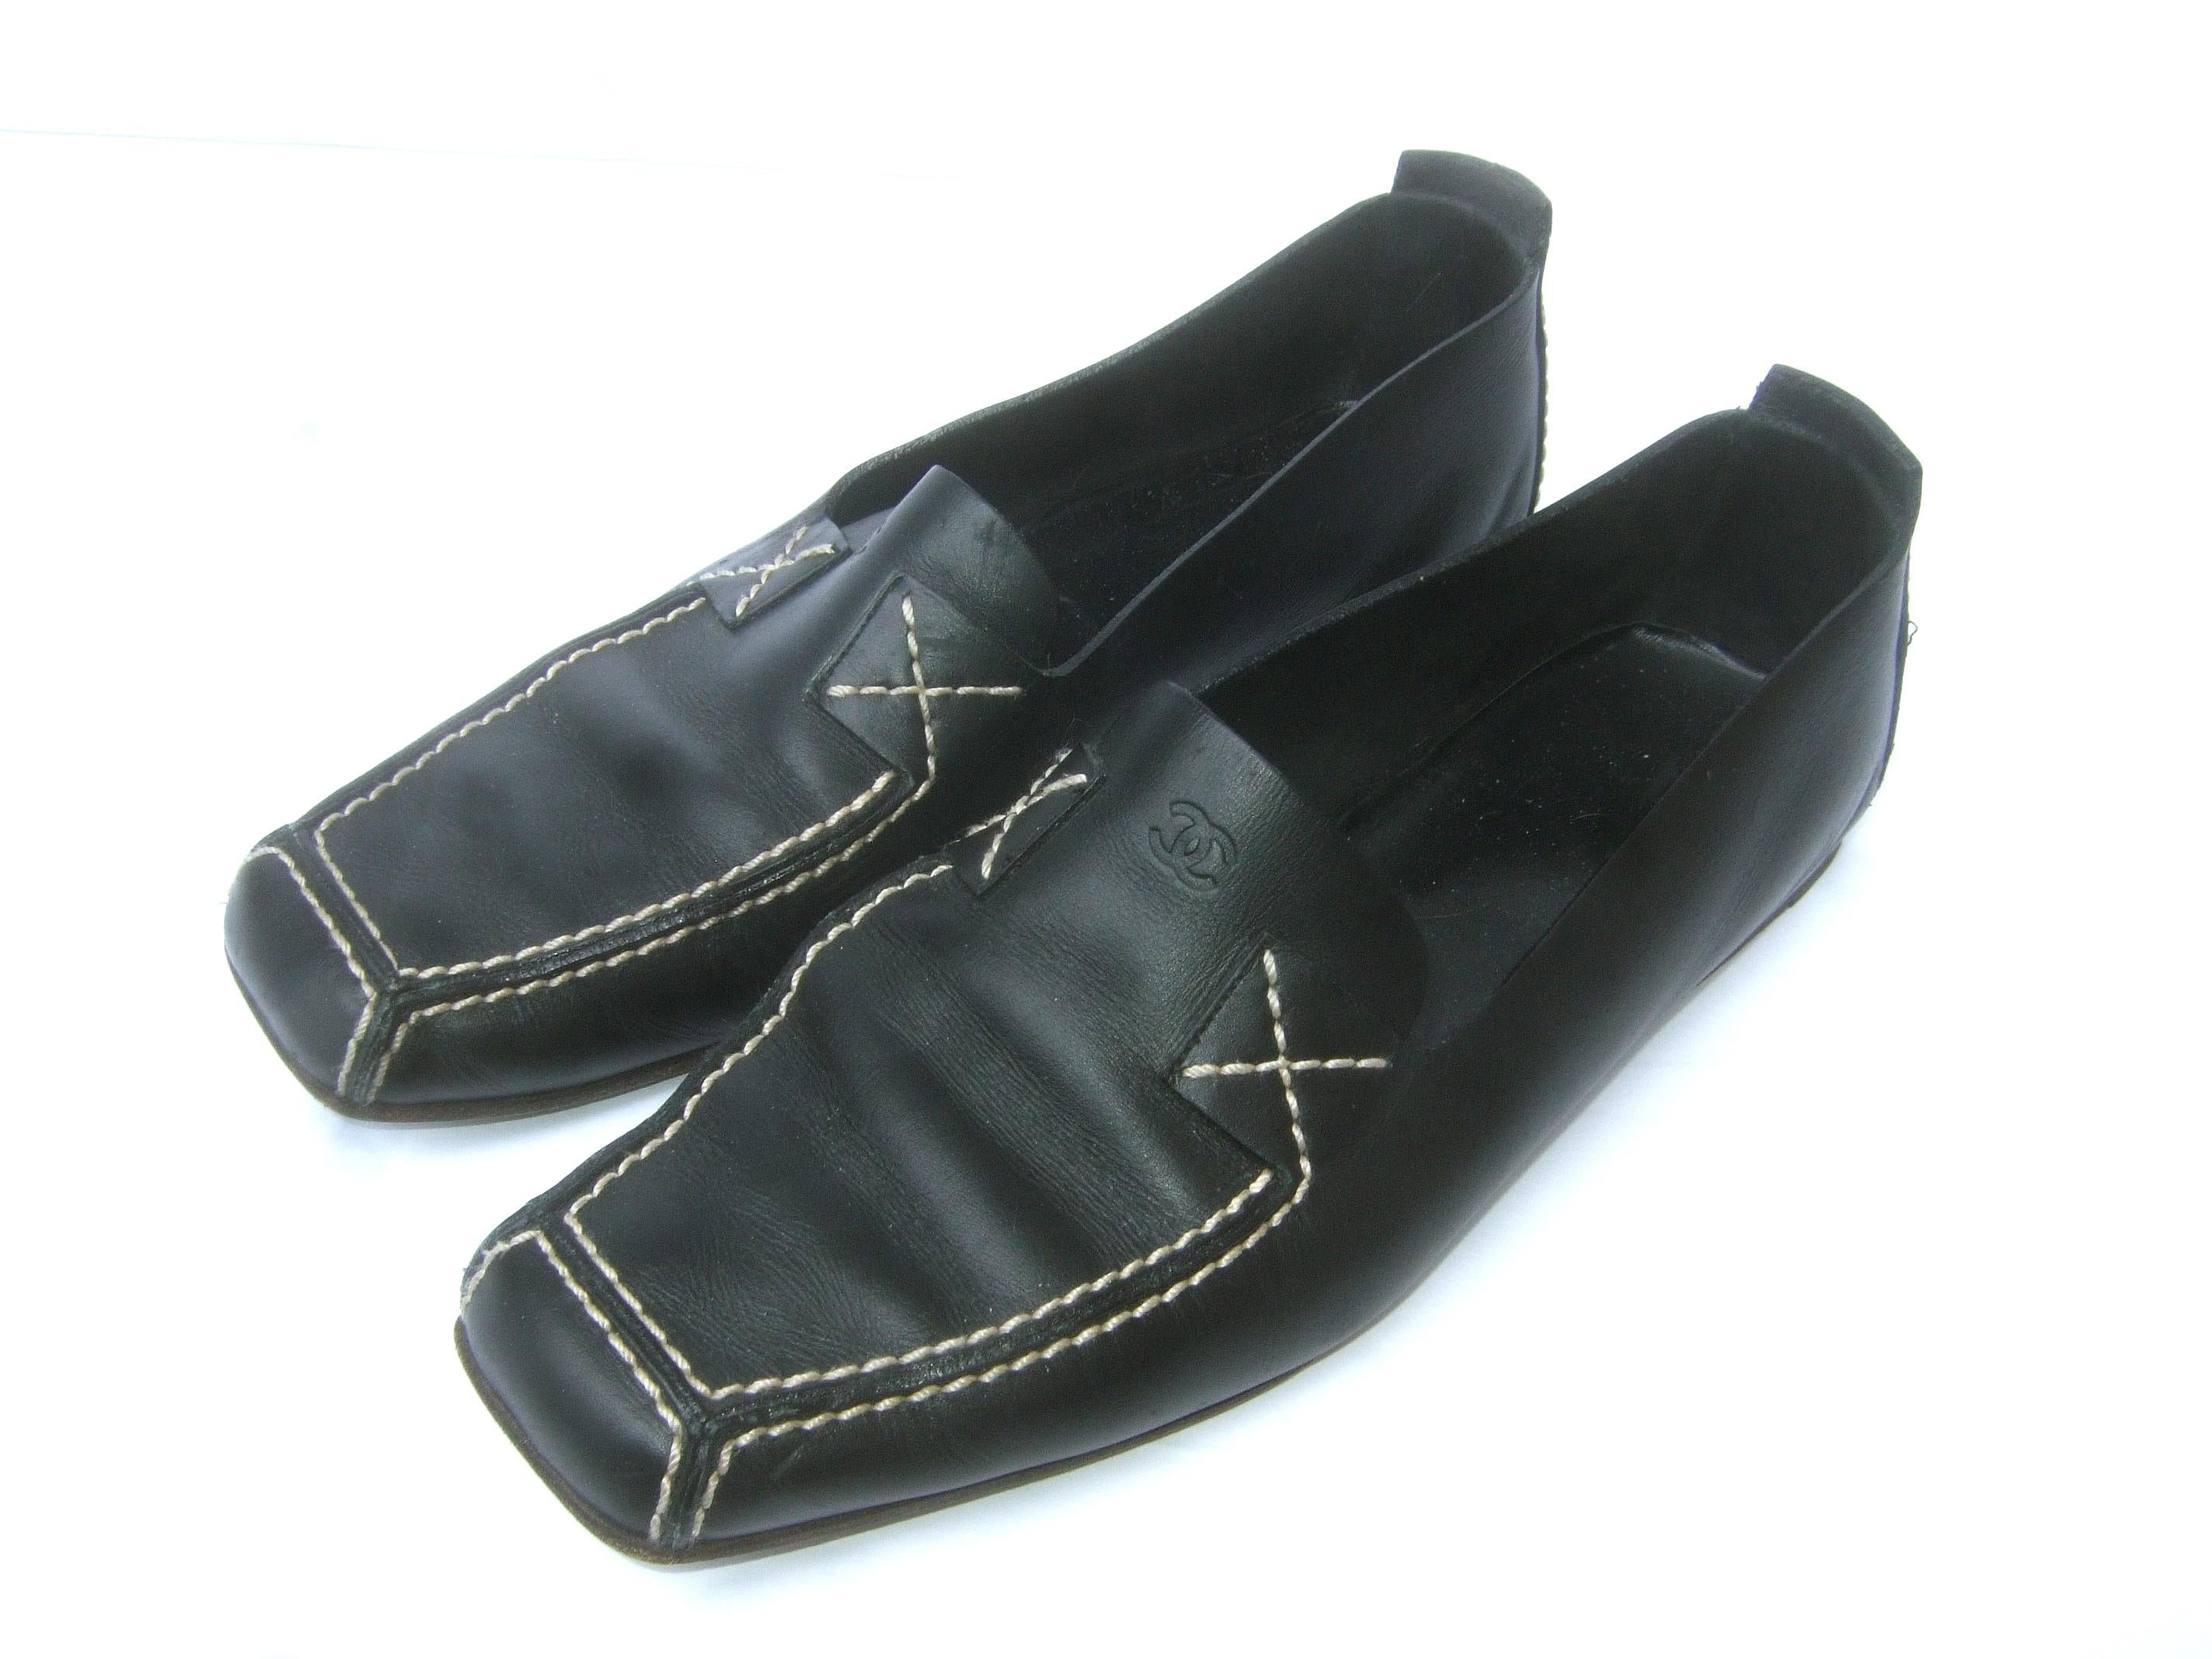 Chanel Black Leather Slip On Italian Low Heel Flats Size 38.5 c 1990s 1